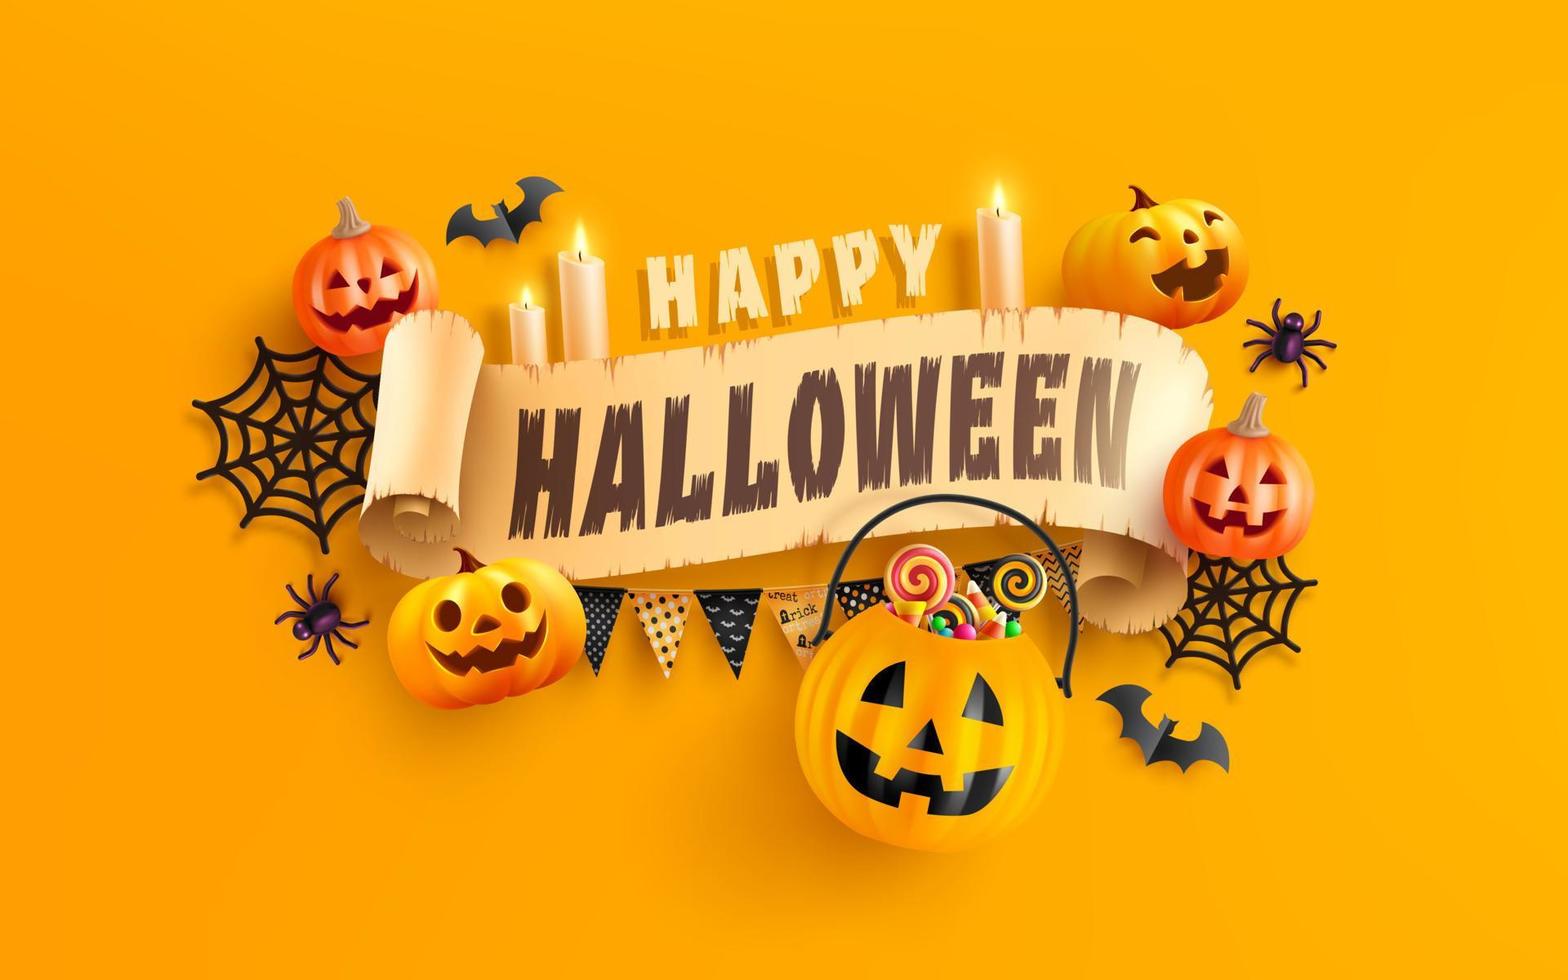 Happy Halloween banner template with halloween pumpkin and Halloween Elements on orange background. Website spooky,Background or banner Halloween template vector